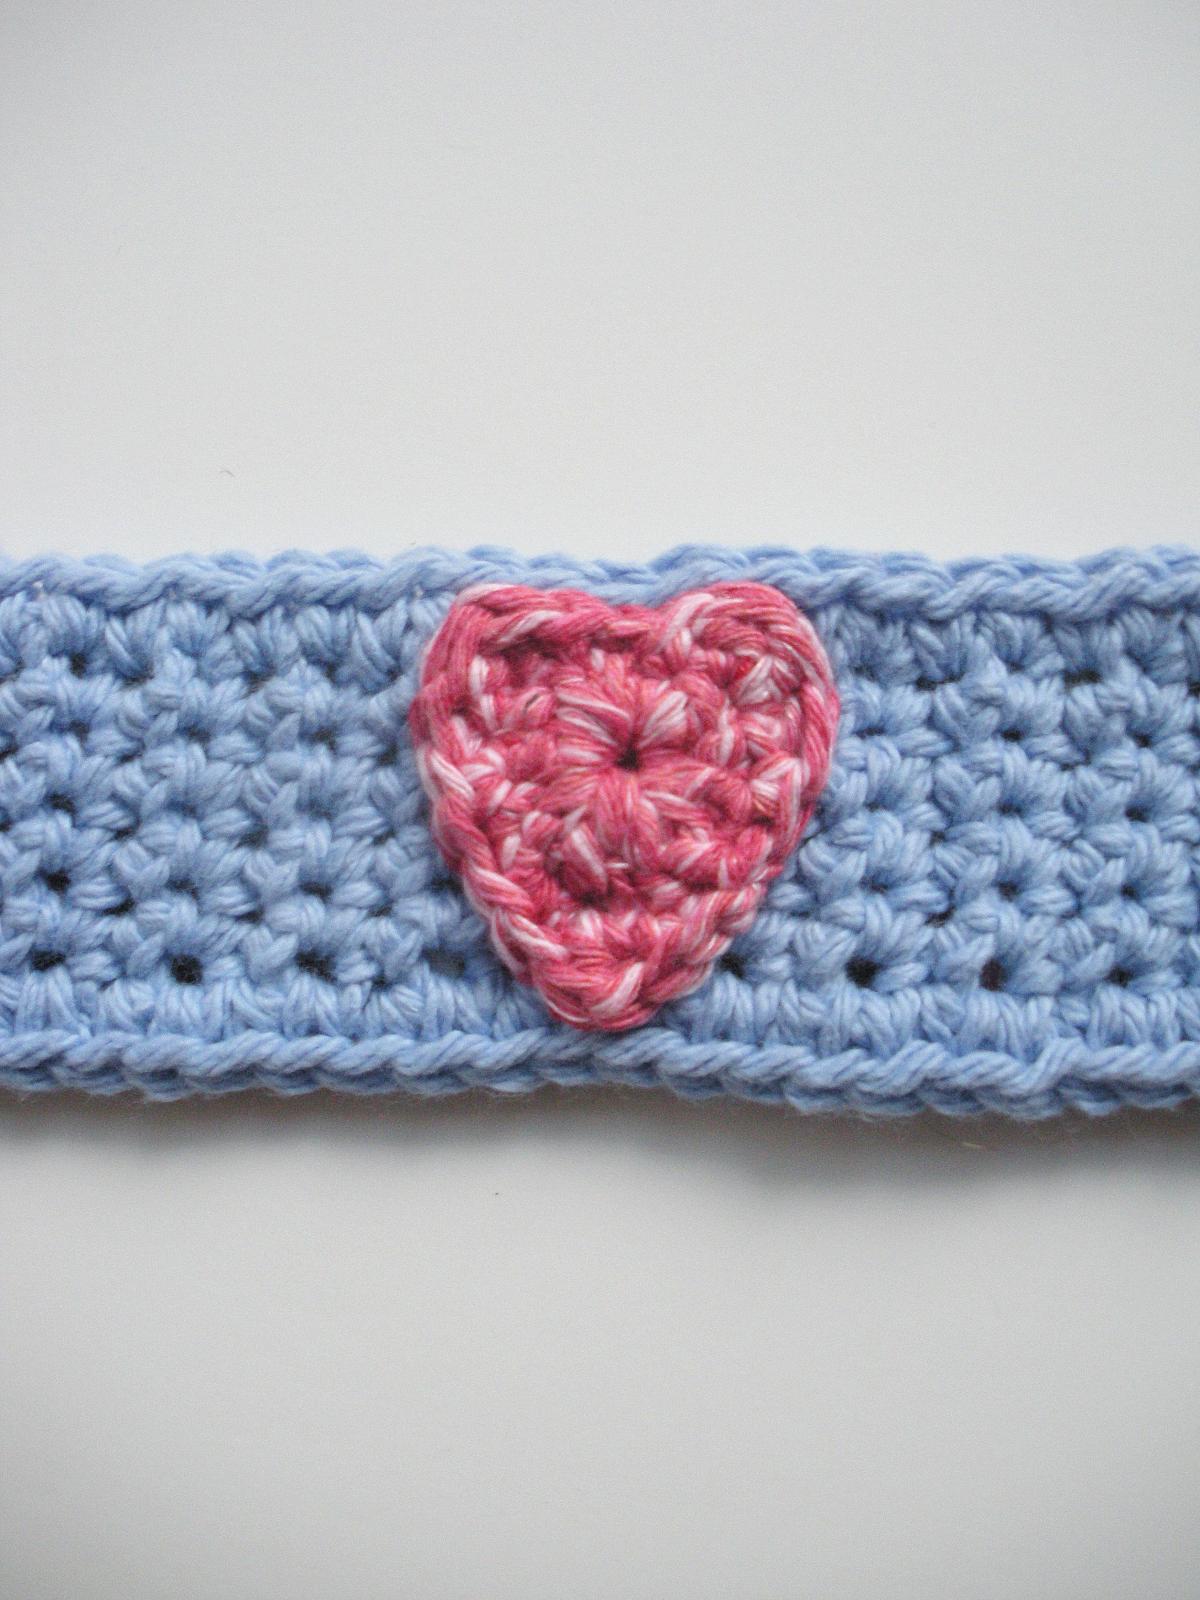 Cotton Crochet Cuff Bracelet In Cornflower Blue With Pink Heart, Ready To Ship.